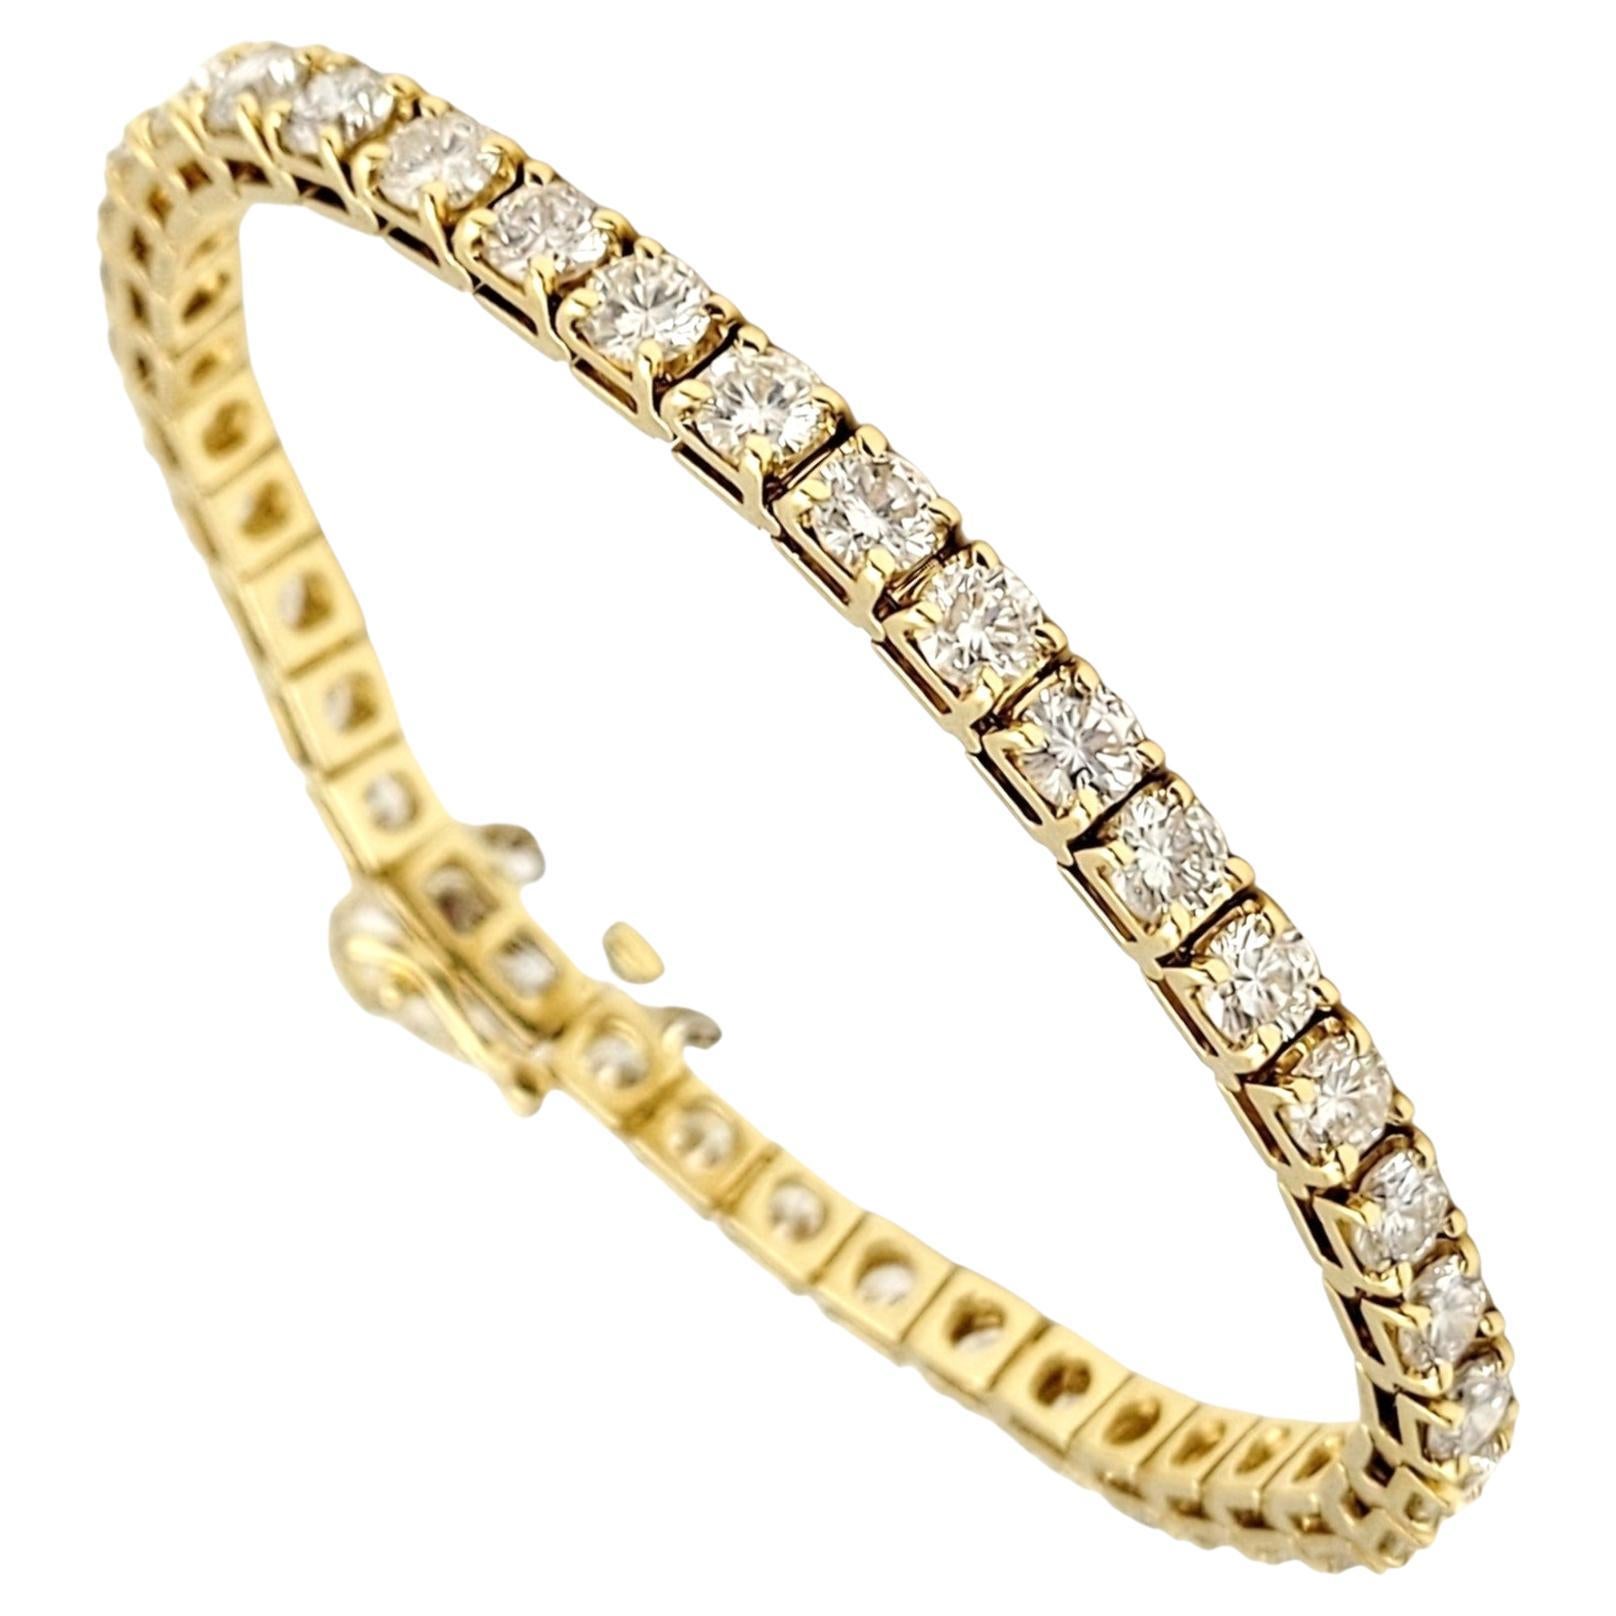 10 Carat Round Brilliant Cut Diamond Tennis Bracelet in 18 Karat Yellow Gold  For Sale